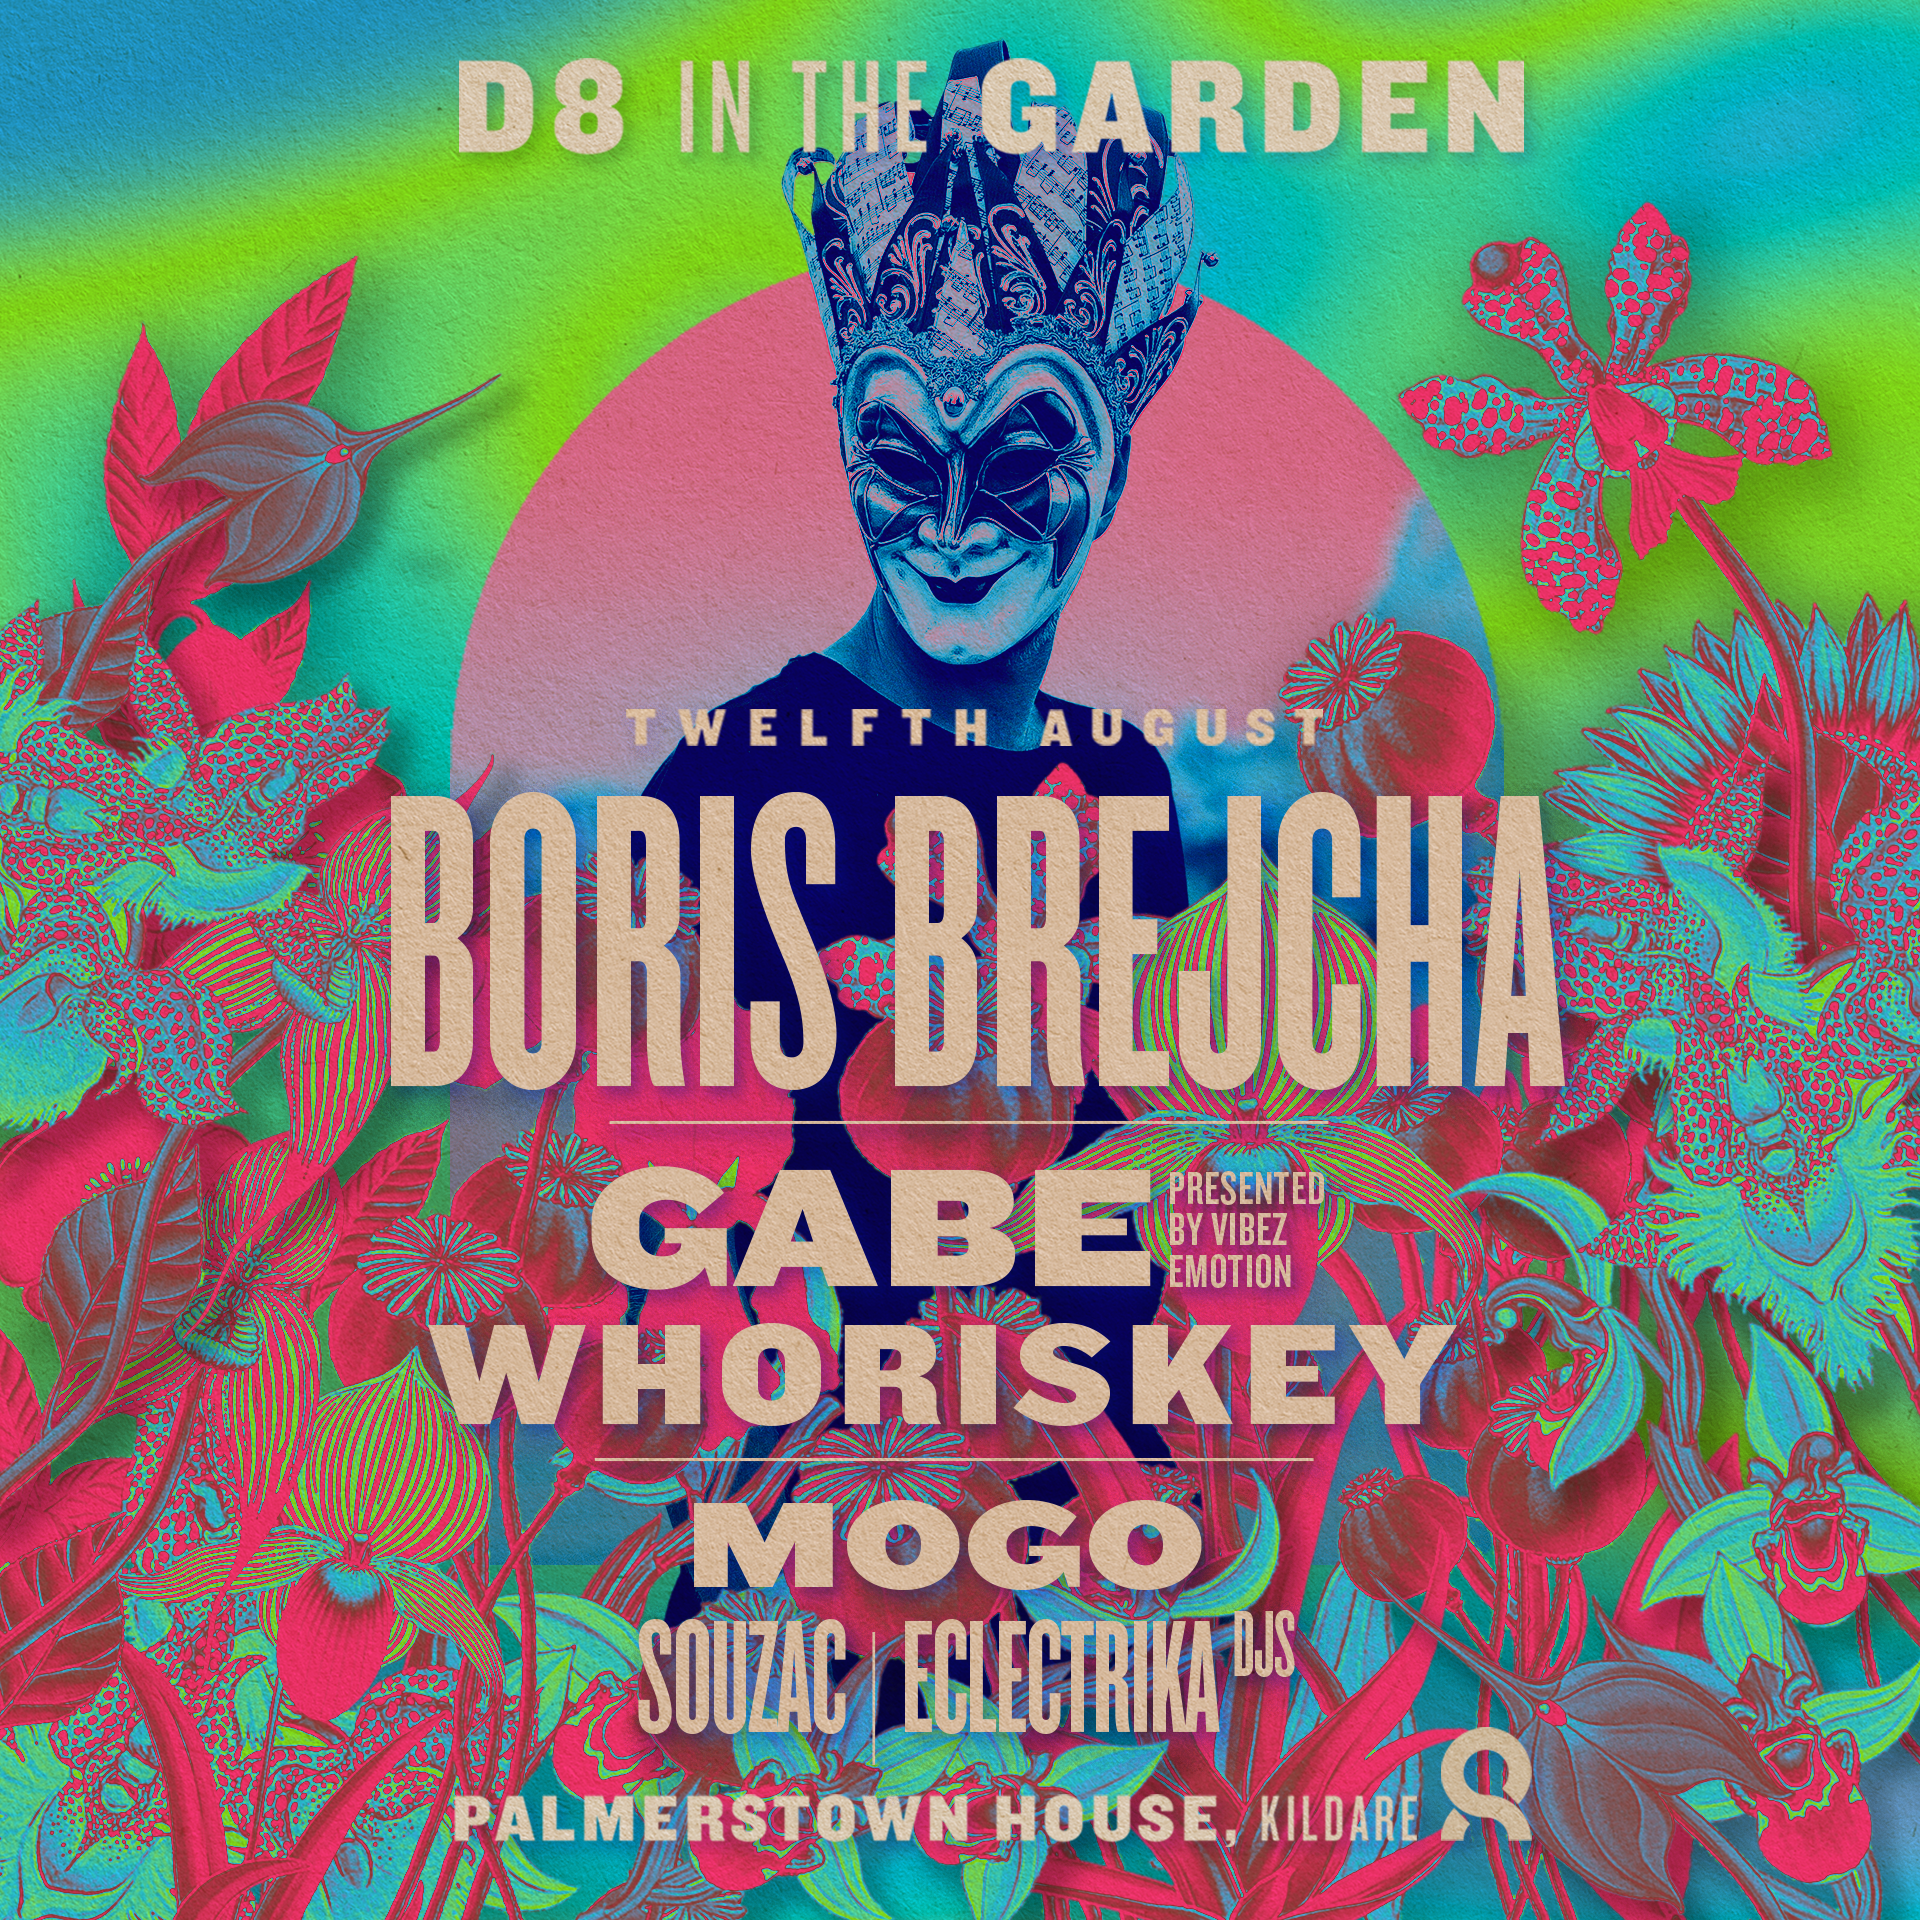 D8 In The Garden - Boris Brejcha - フライヤー裏